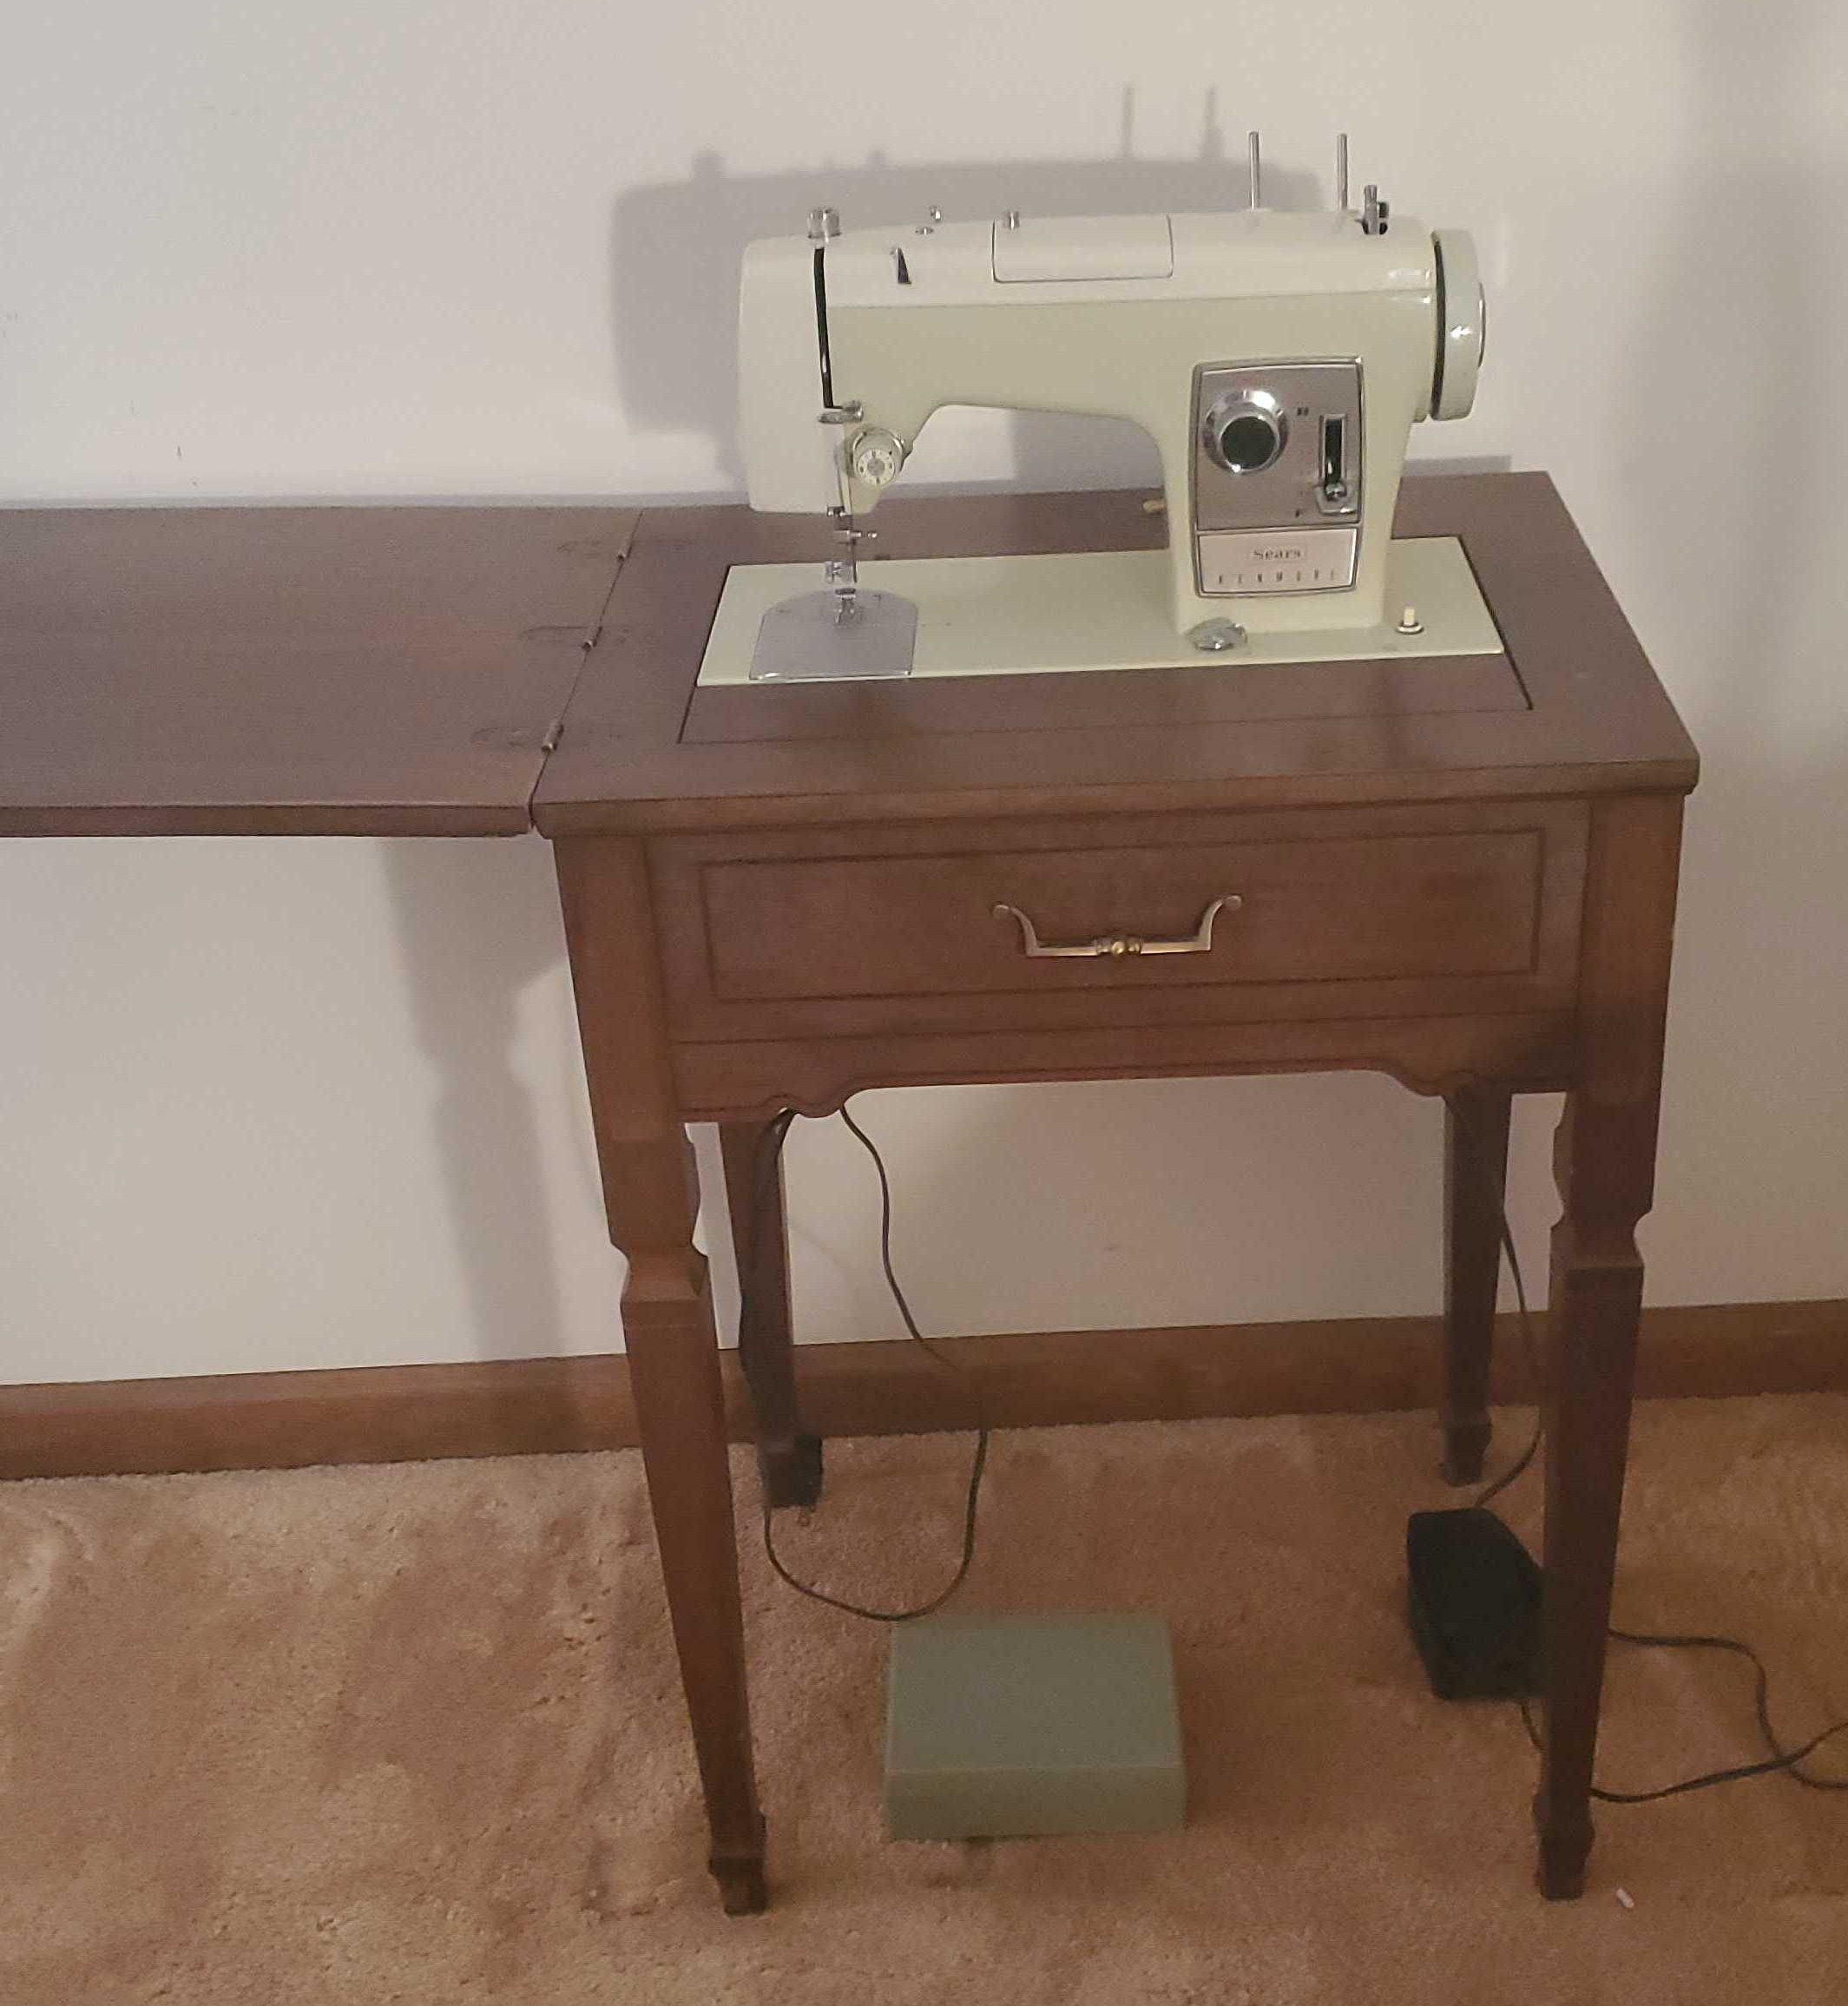 Sears-Kenmore-Sewing-Machine